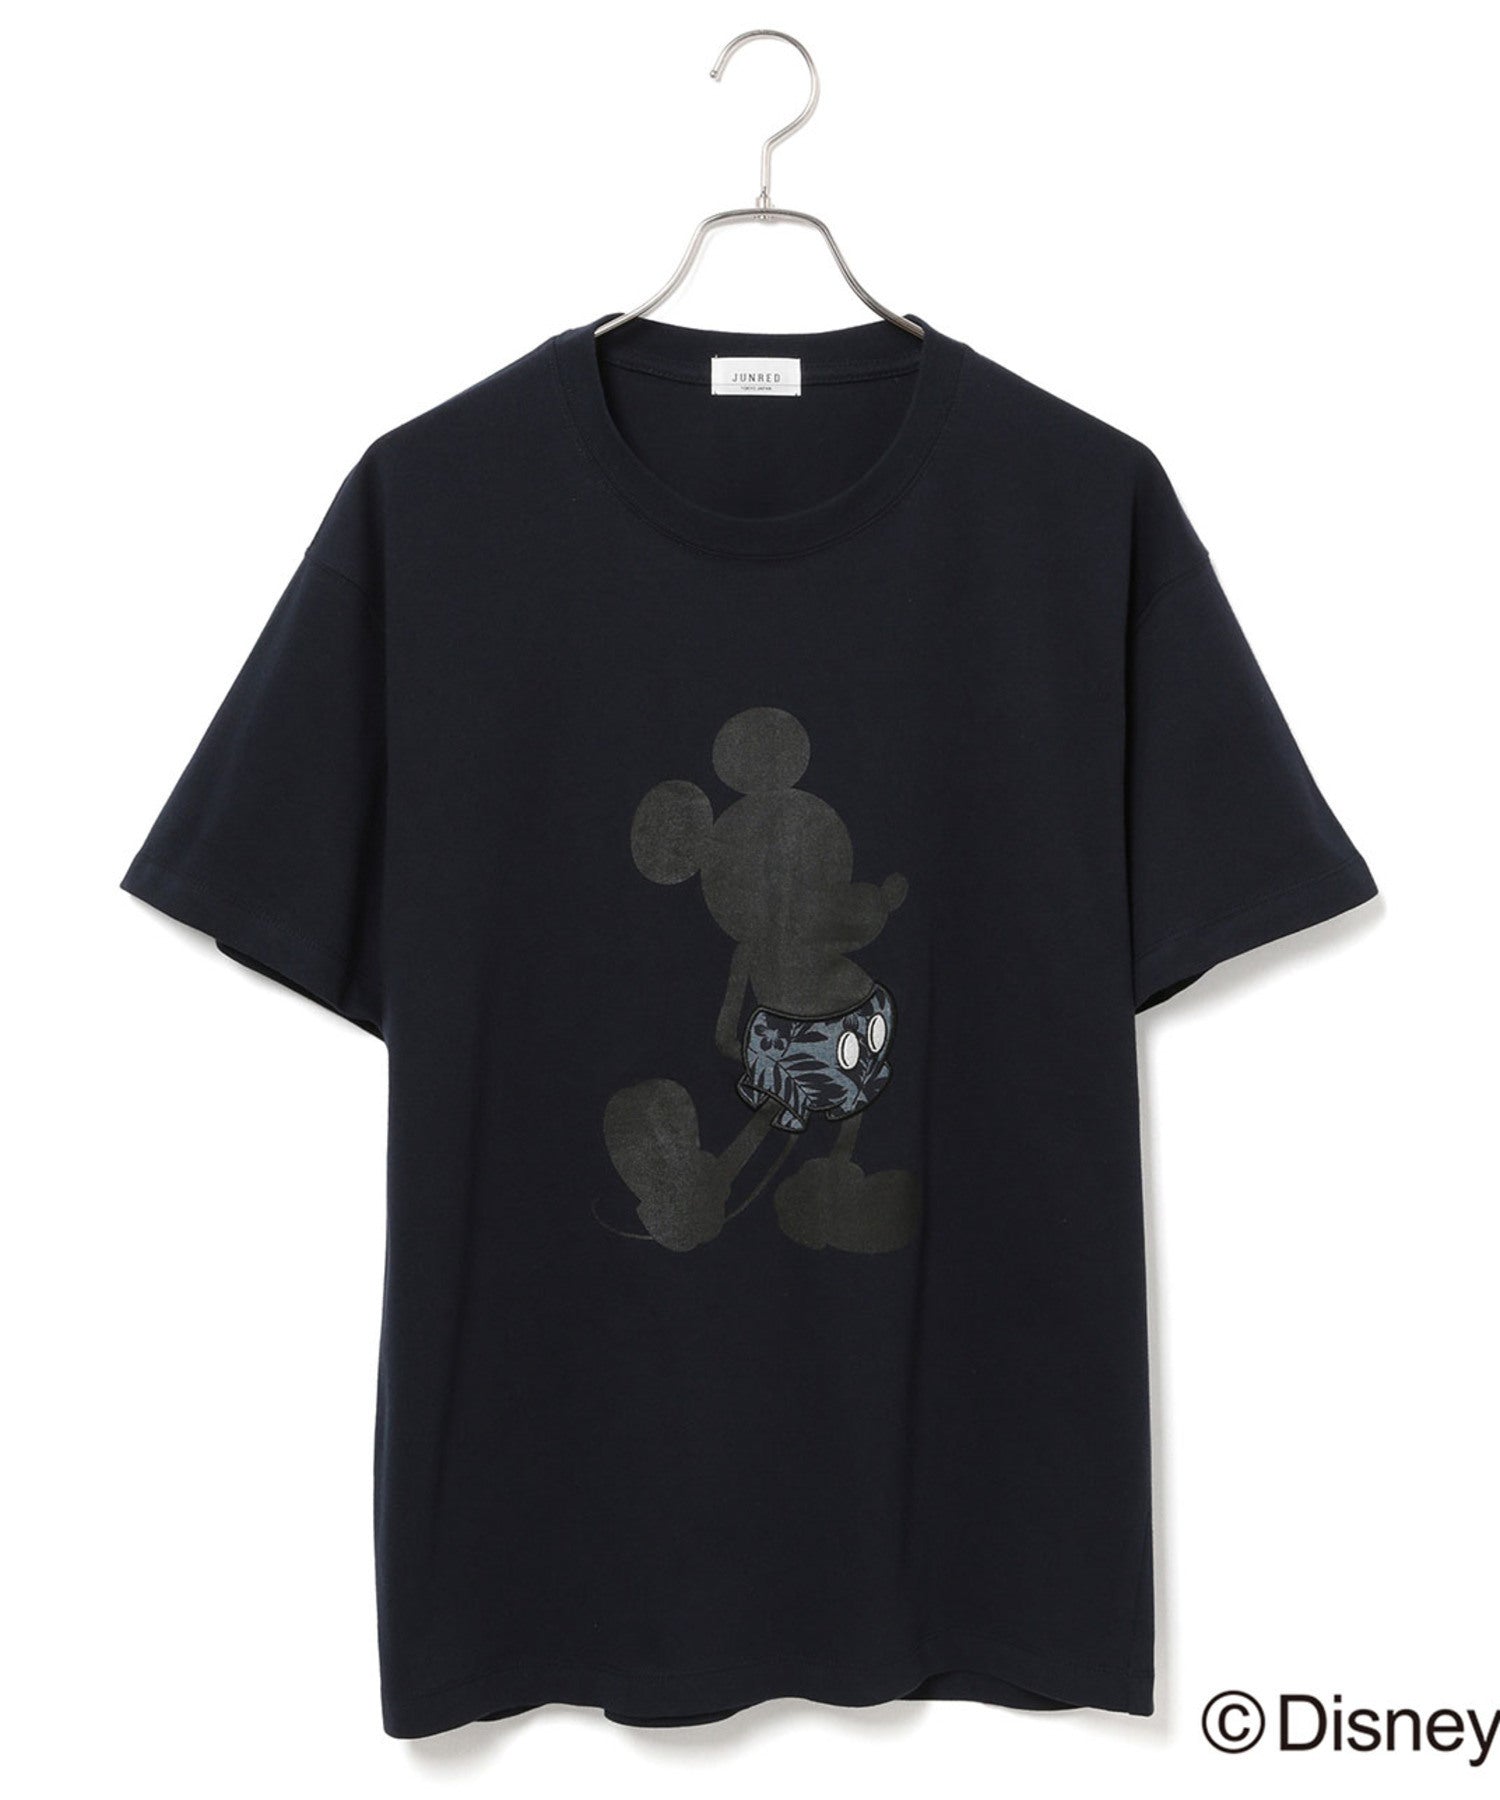 Junred Mickey Mouse ミッキーマウス シルエットミッキー別地使いtシャツ トップス Tシャツ カットソー 通販 J Adore Jun Online